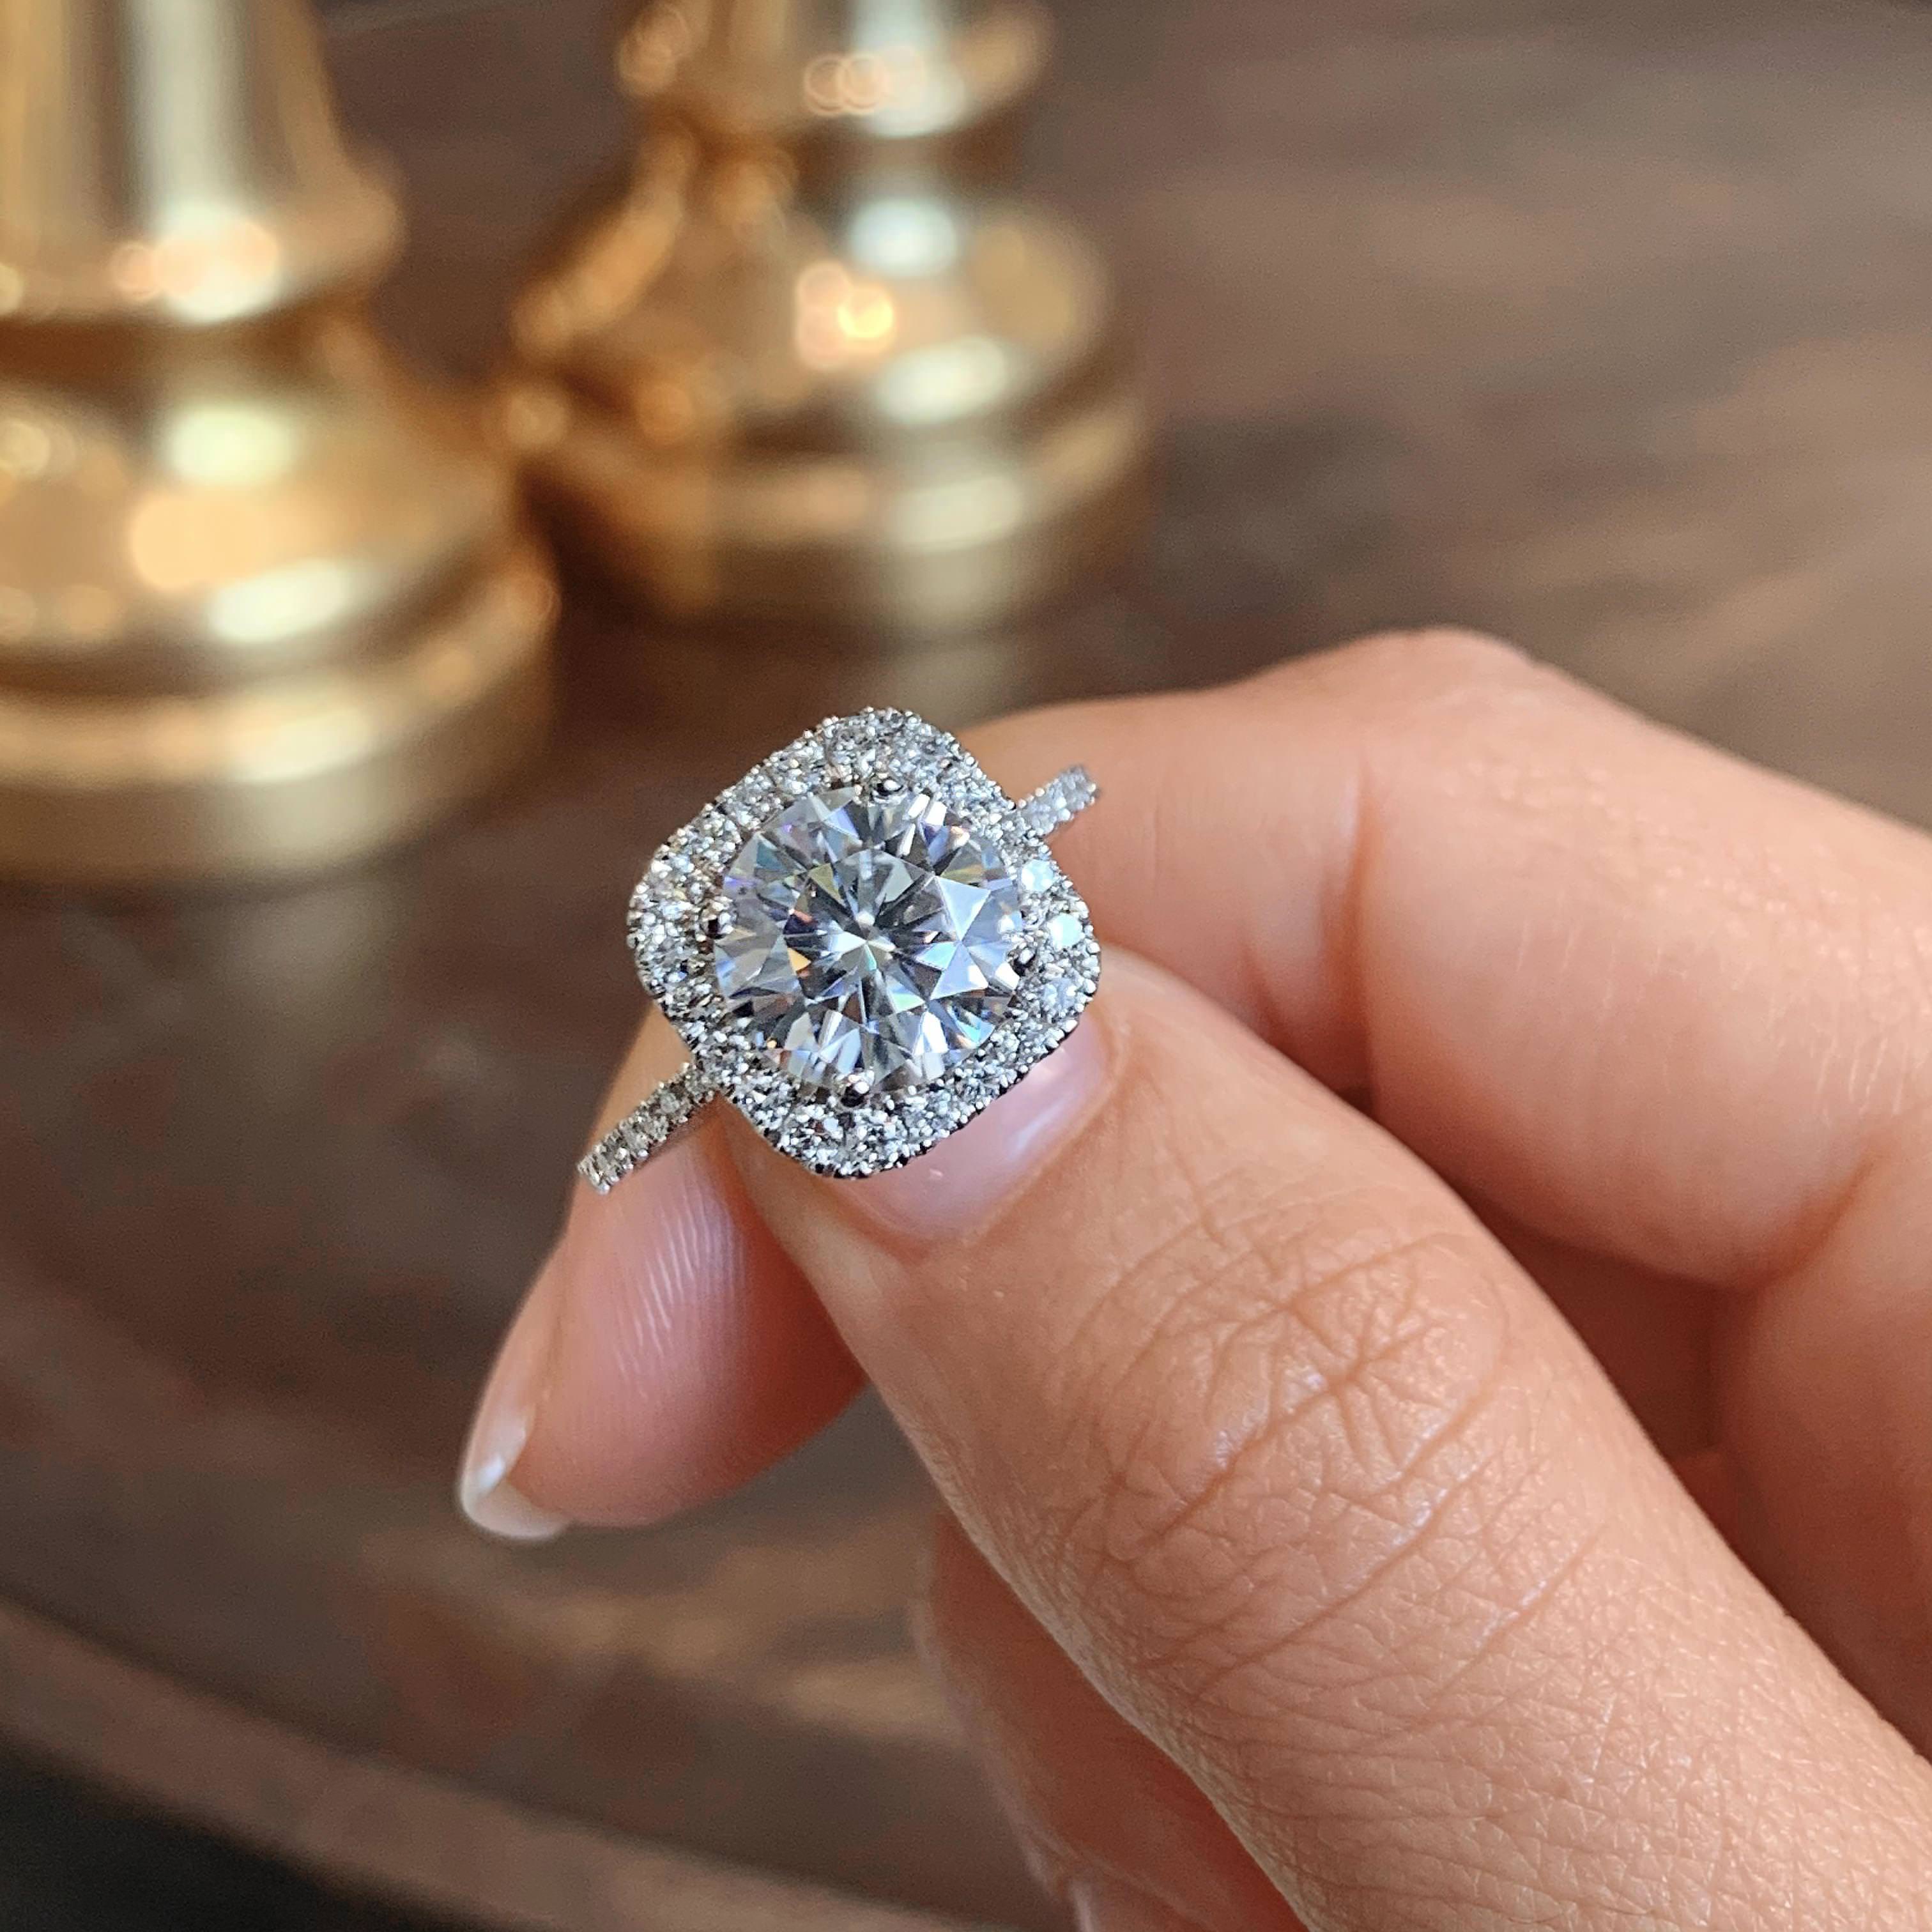 Catalina Moissanite & Diamonds Ring   (3.5 Carat) -18K White Gold